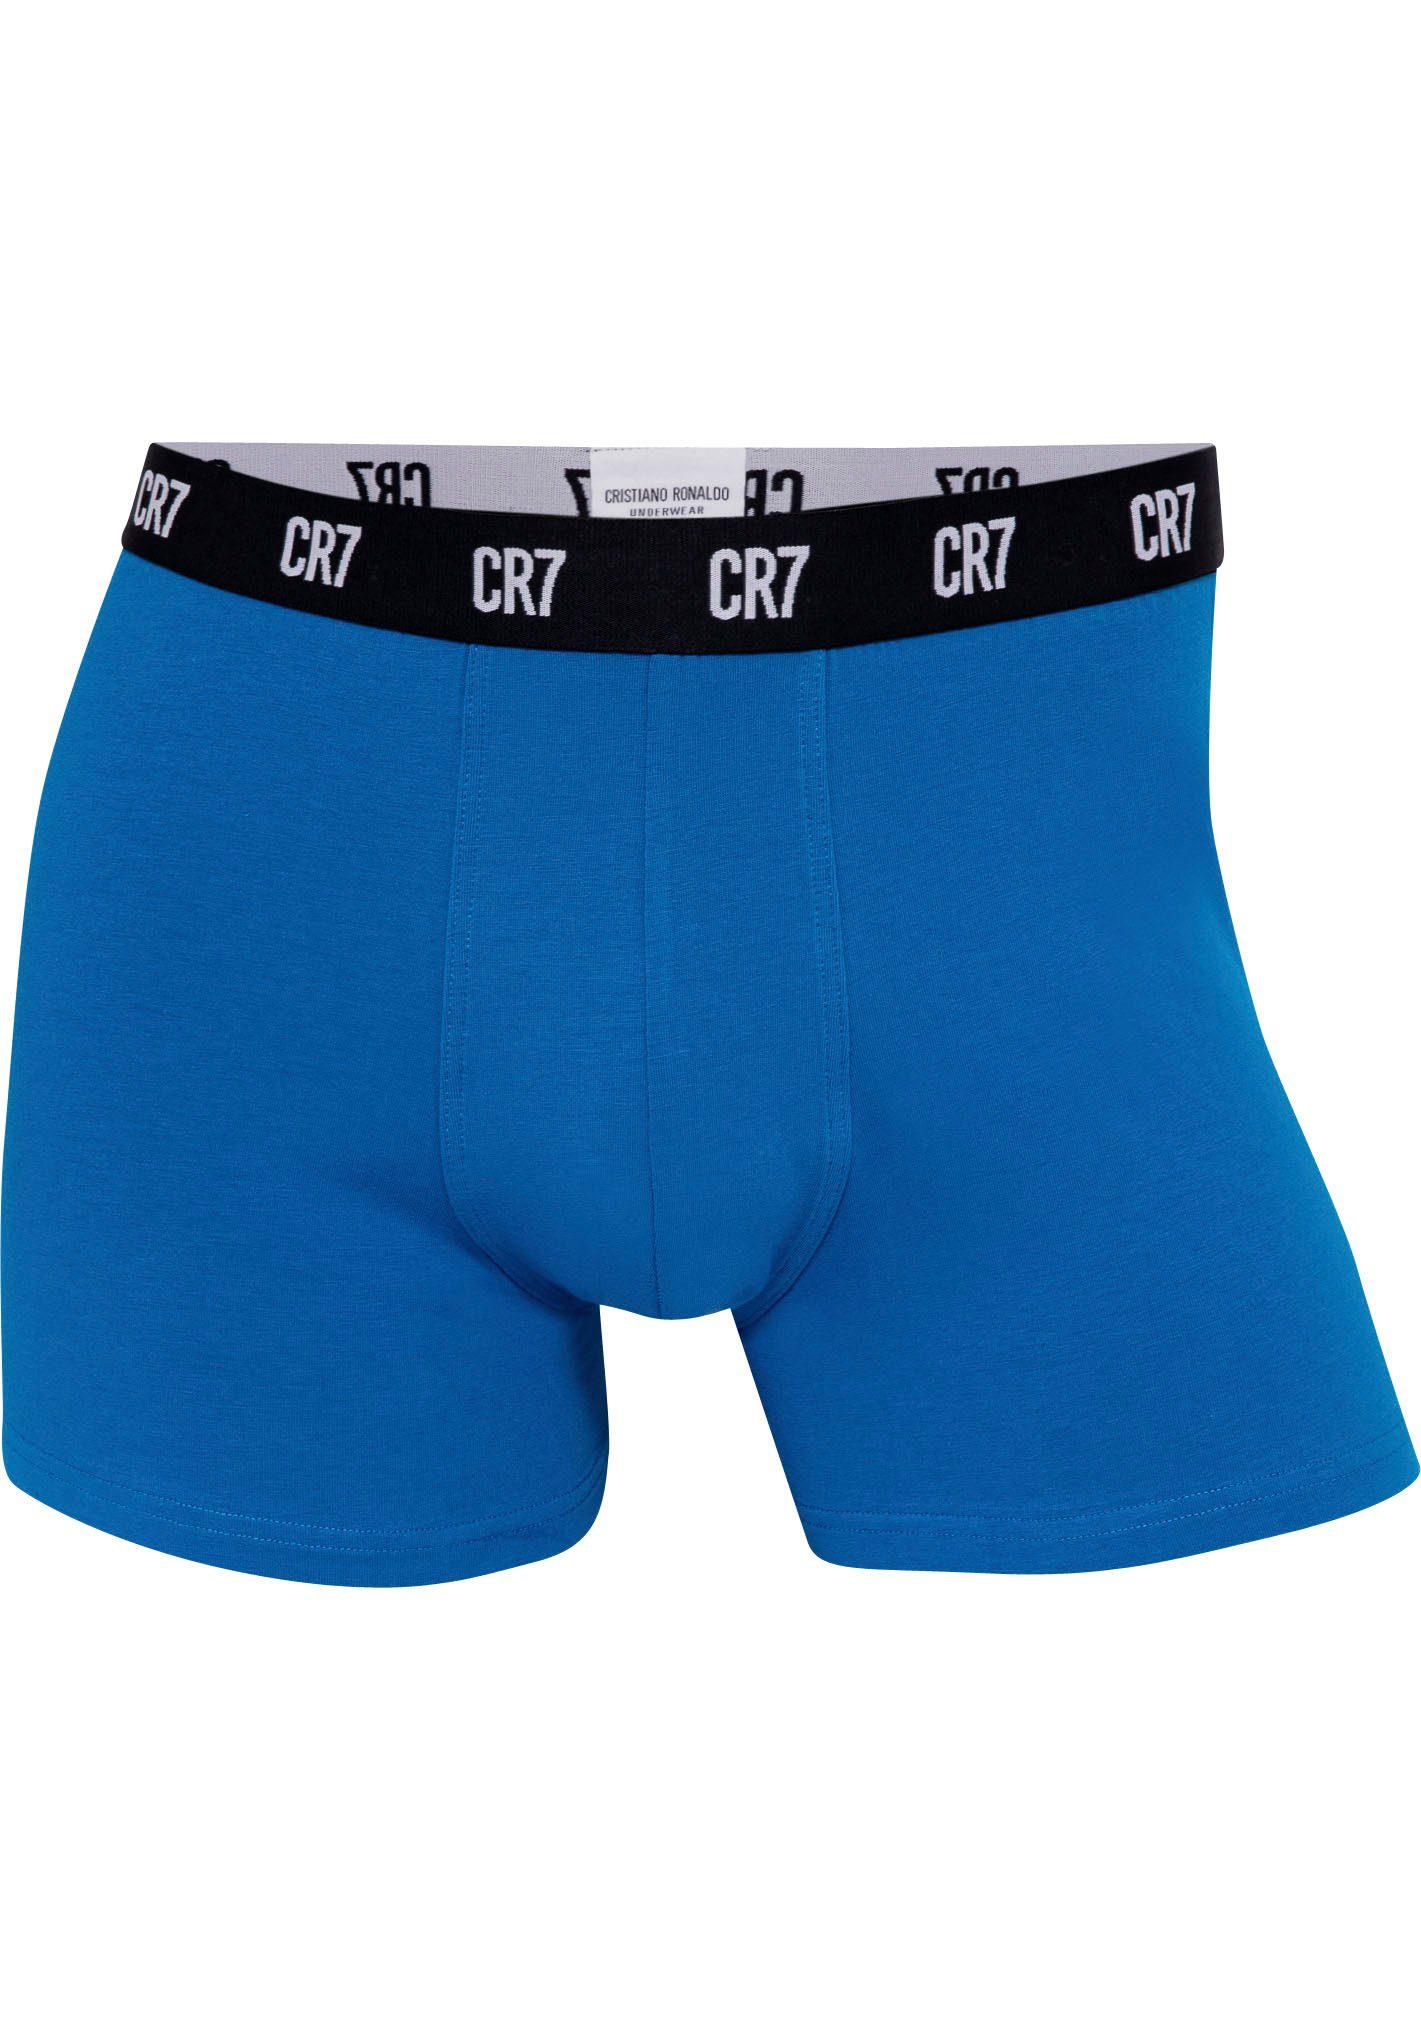 CR7 Trunk (5-St., 5er-Pack) mit blue/blue/green/pink navy/middle Bündchen elastischem